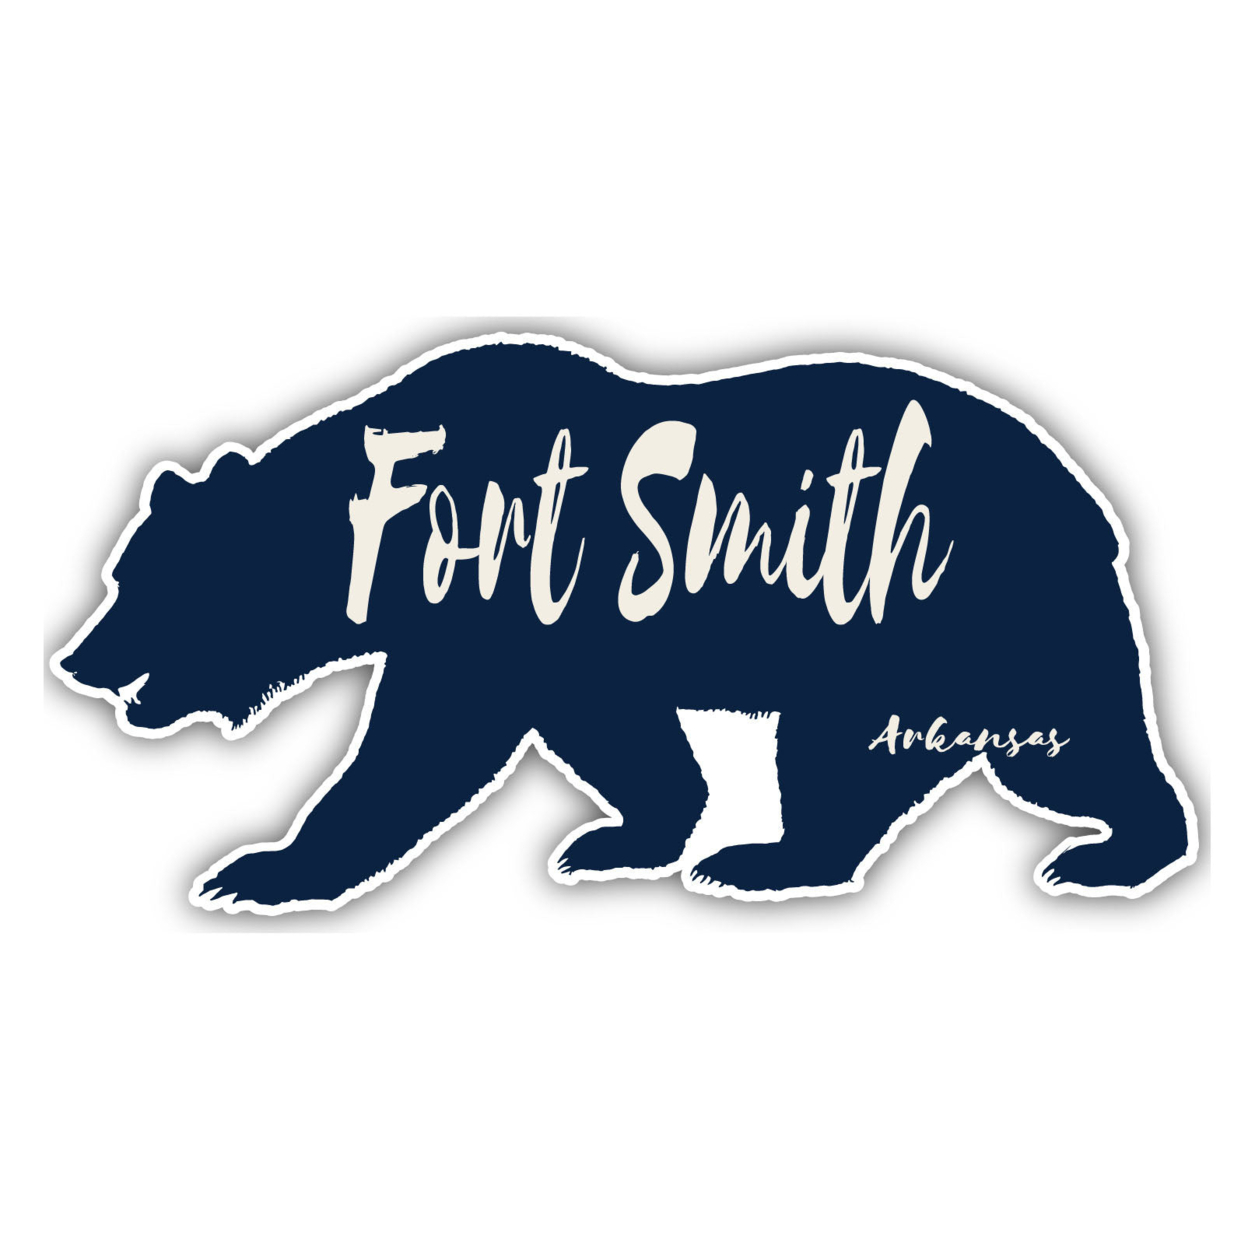 Fort Smith Arkansas Souvenir Decorative Stickers (Choose Theme And Size) - Single Unit, 12-Inch, Bear